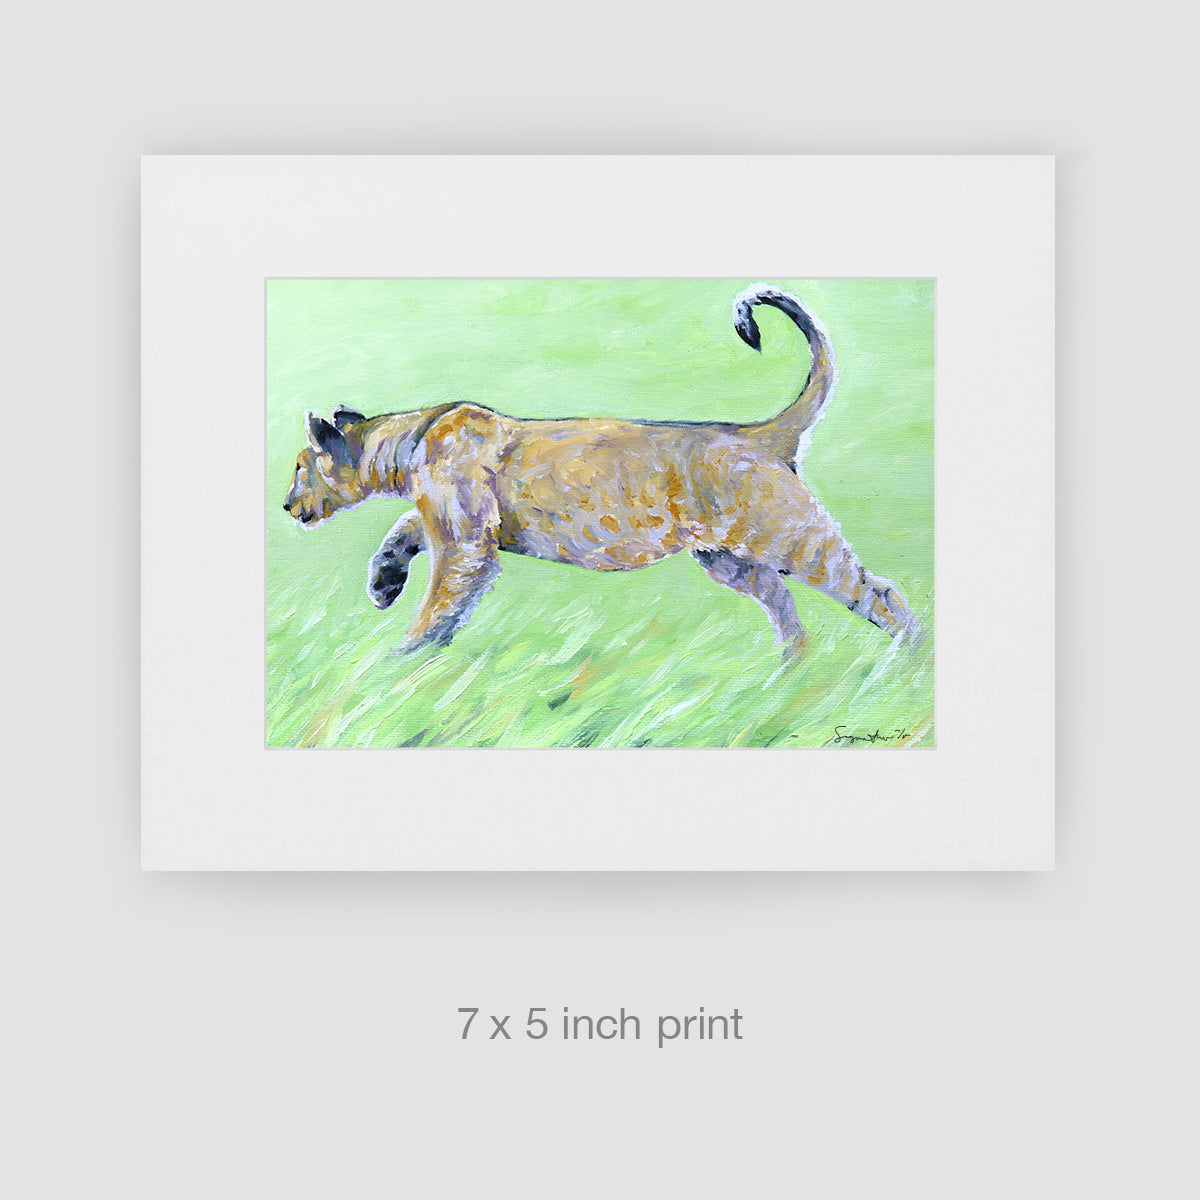 He Hunts, Lion Cub, Limited Edition Print